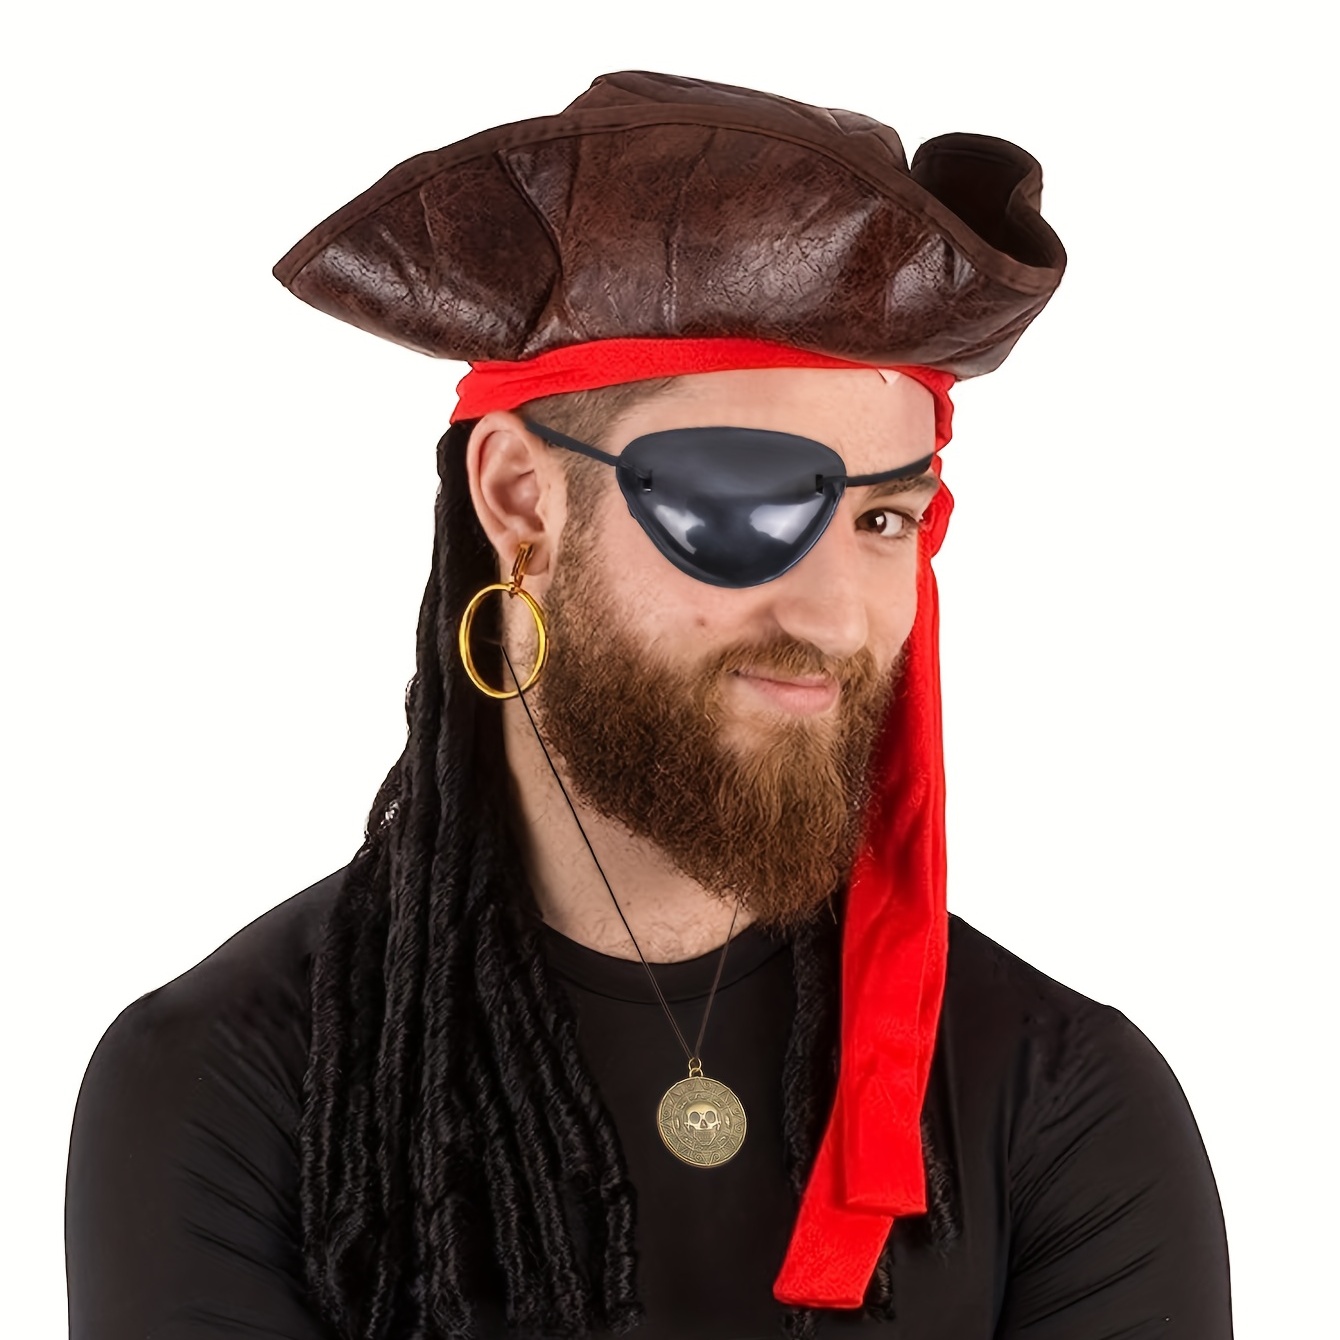 Kit accesorios del pirata Tobias para hombre